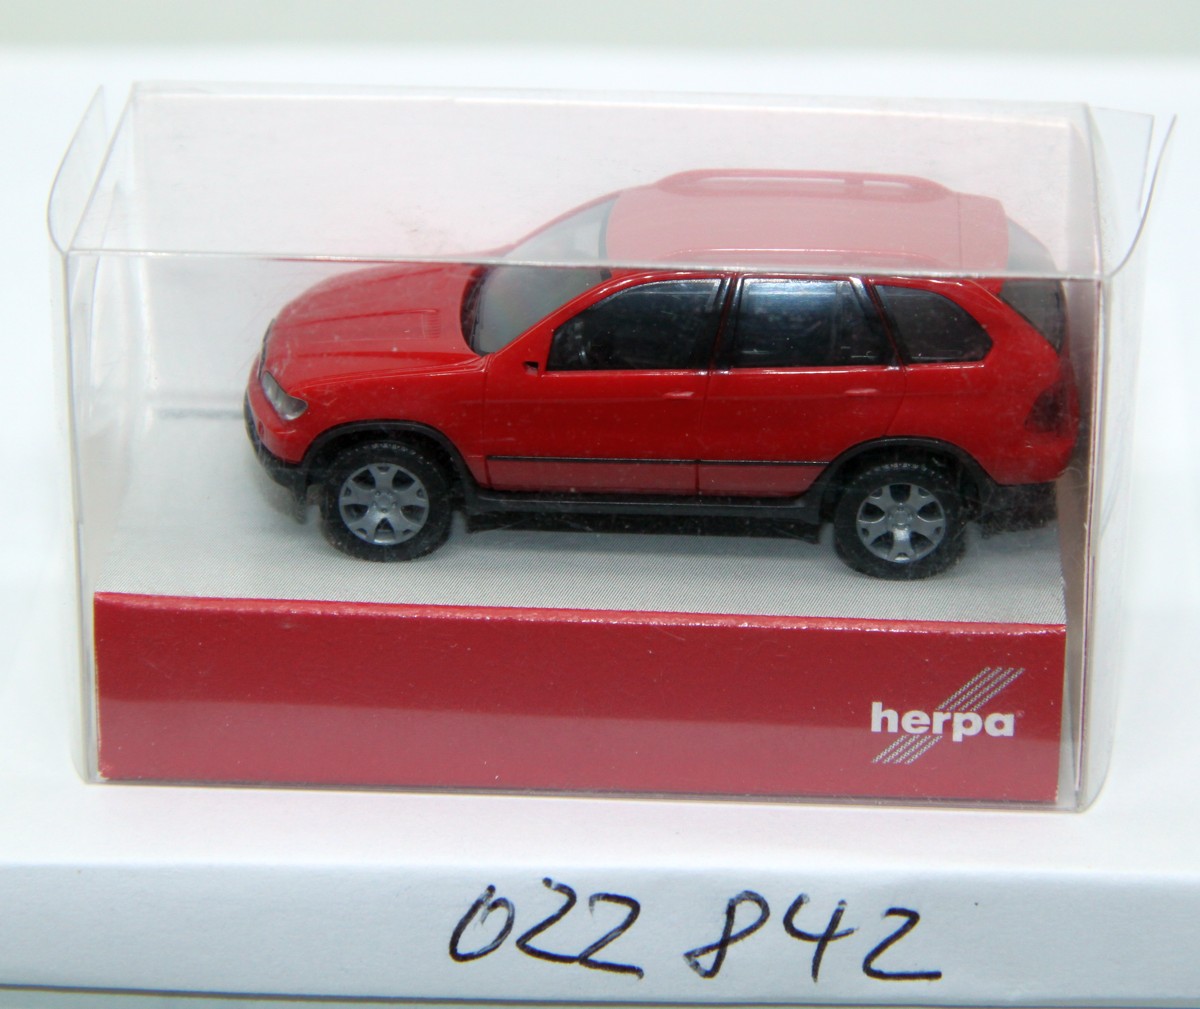 Herpa 022842, BMW X5, Std, red, for H0 gauge,